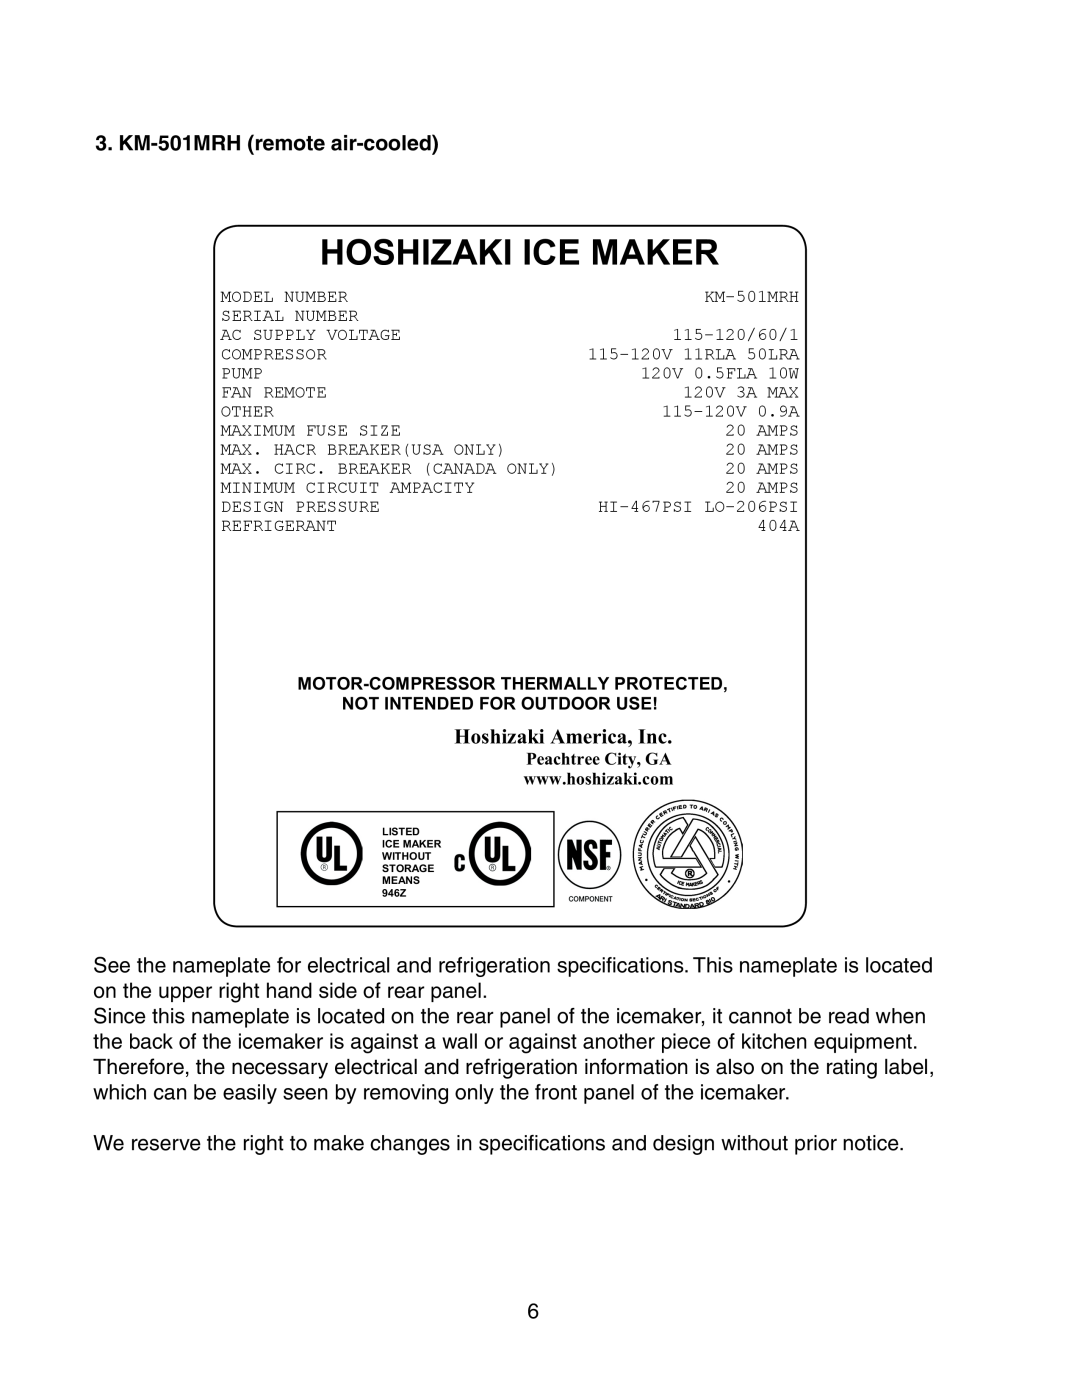 Hoshizaki KM-501MWH instruction manual KM-501MRH remote air-cooled, Hoshizaki Ice Maker, Hoshizaki America, Inc 